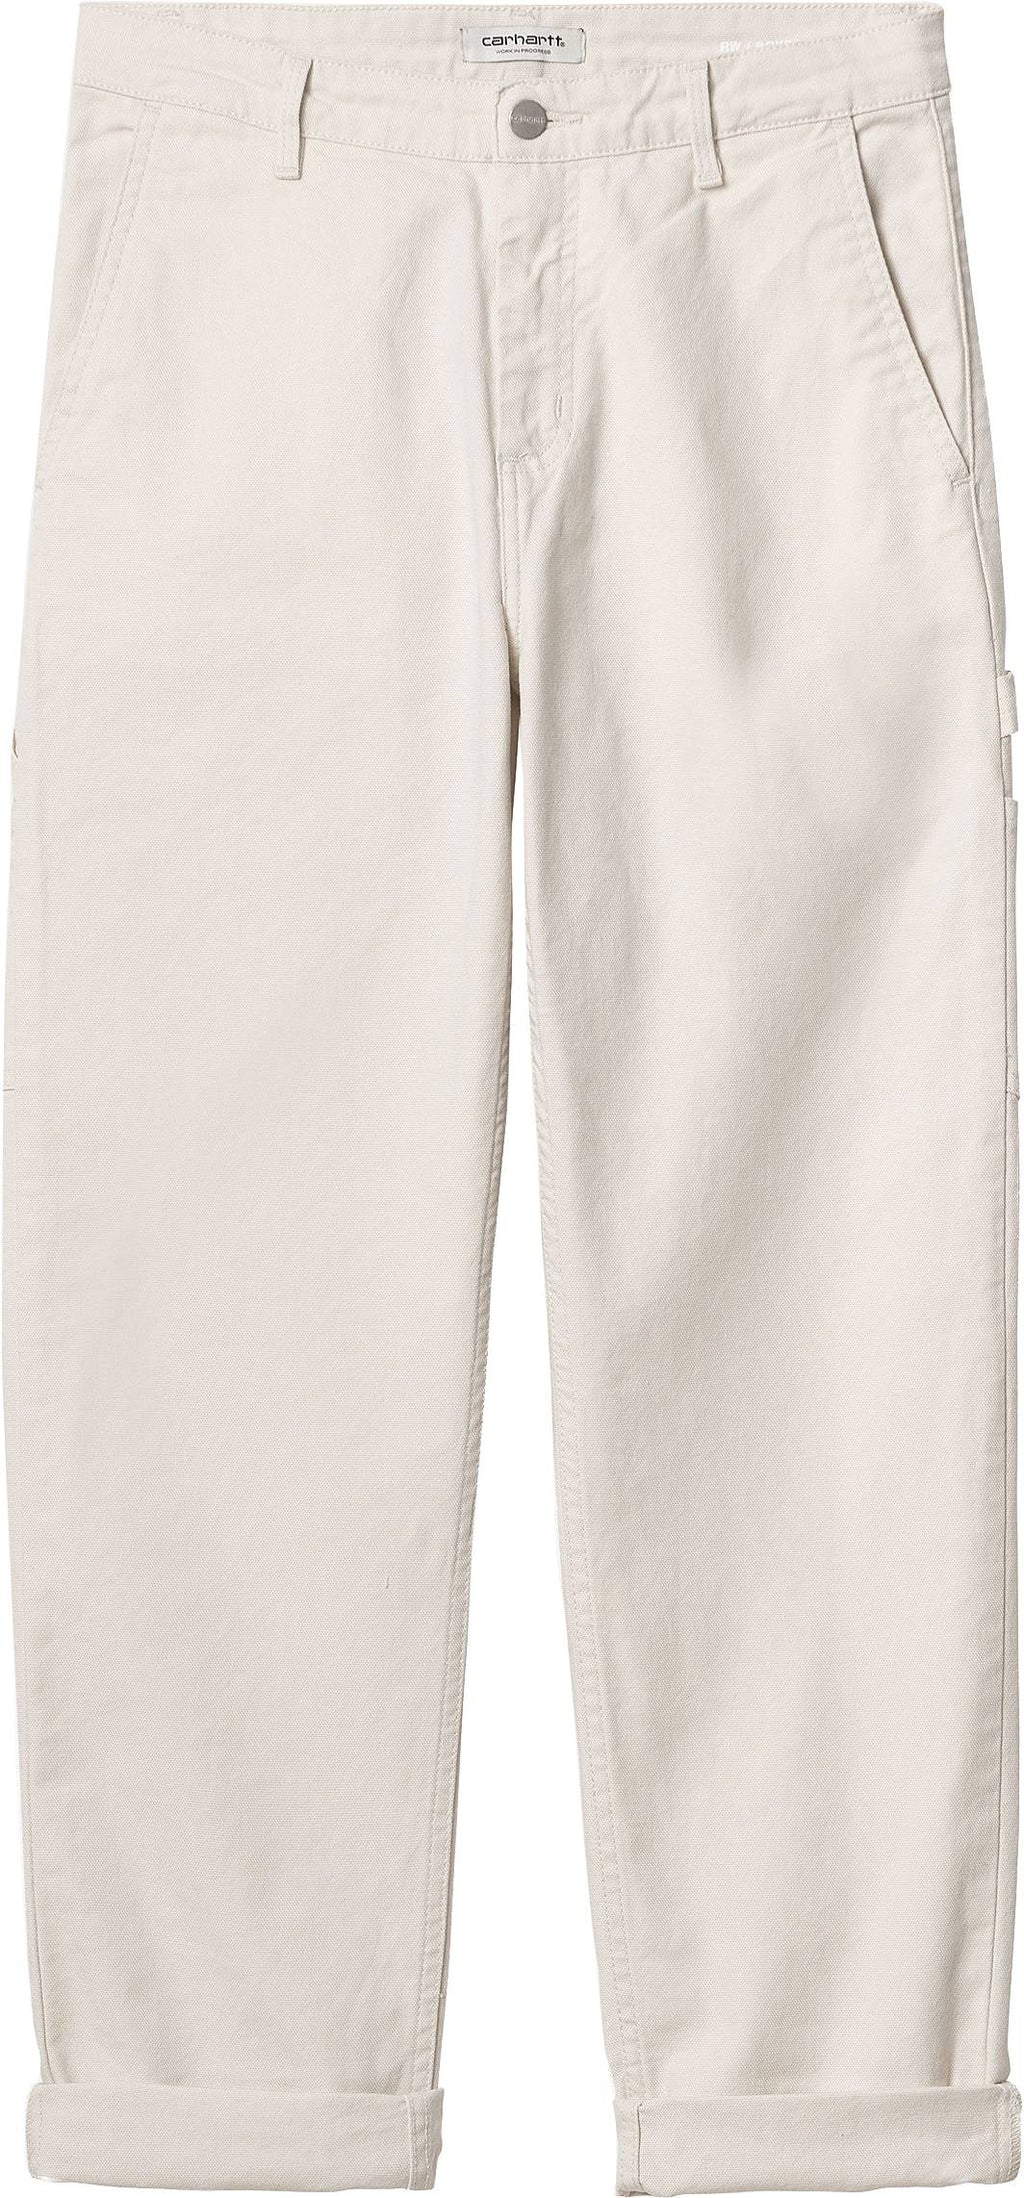  Carhartt Wip Pantaloni W Pierce Pant Salt Rinsed Bianco Donna - 2